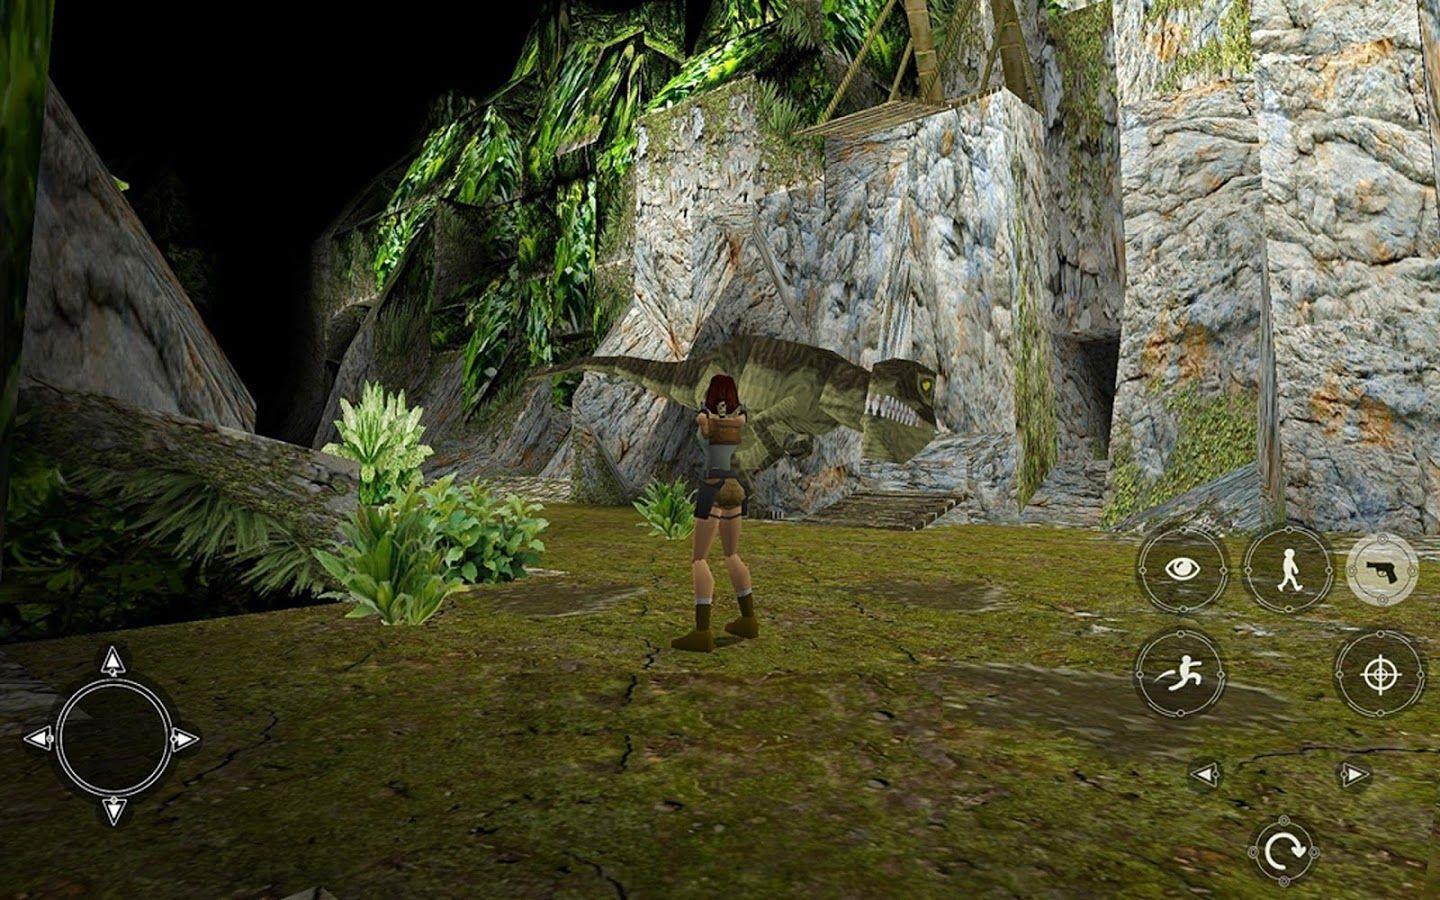 Not April Fools] Square Enix Releases The Original Tomb Raider On